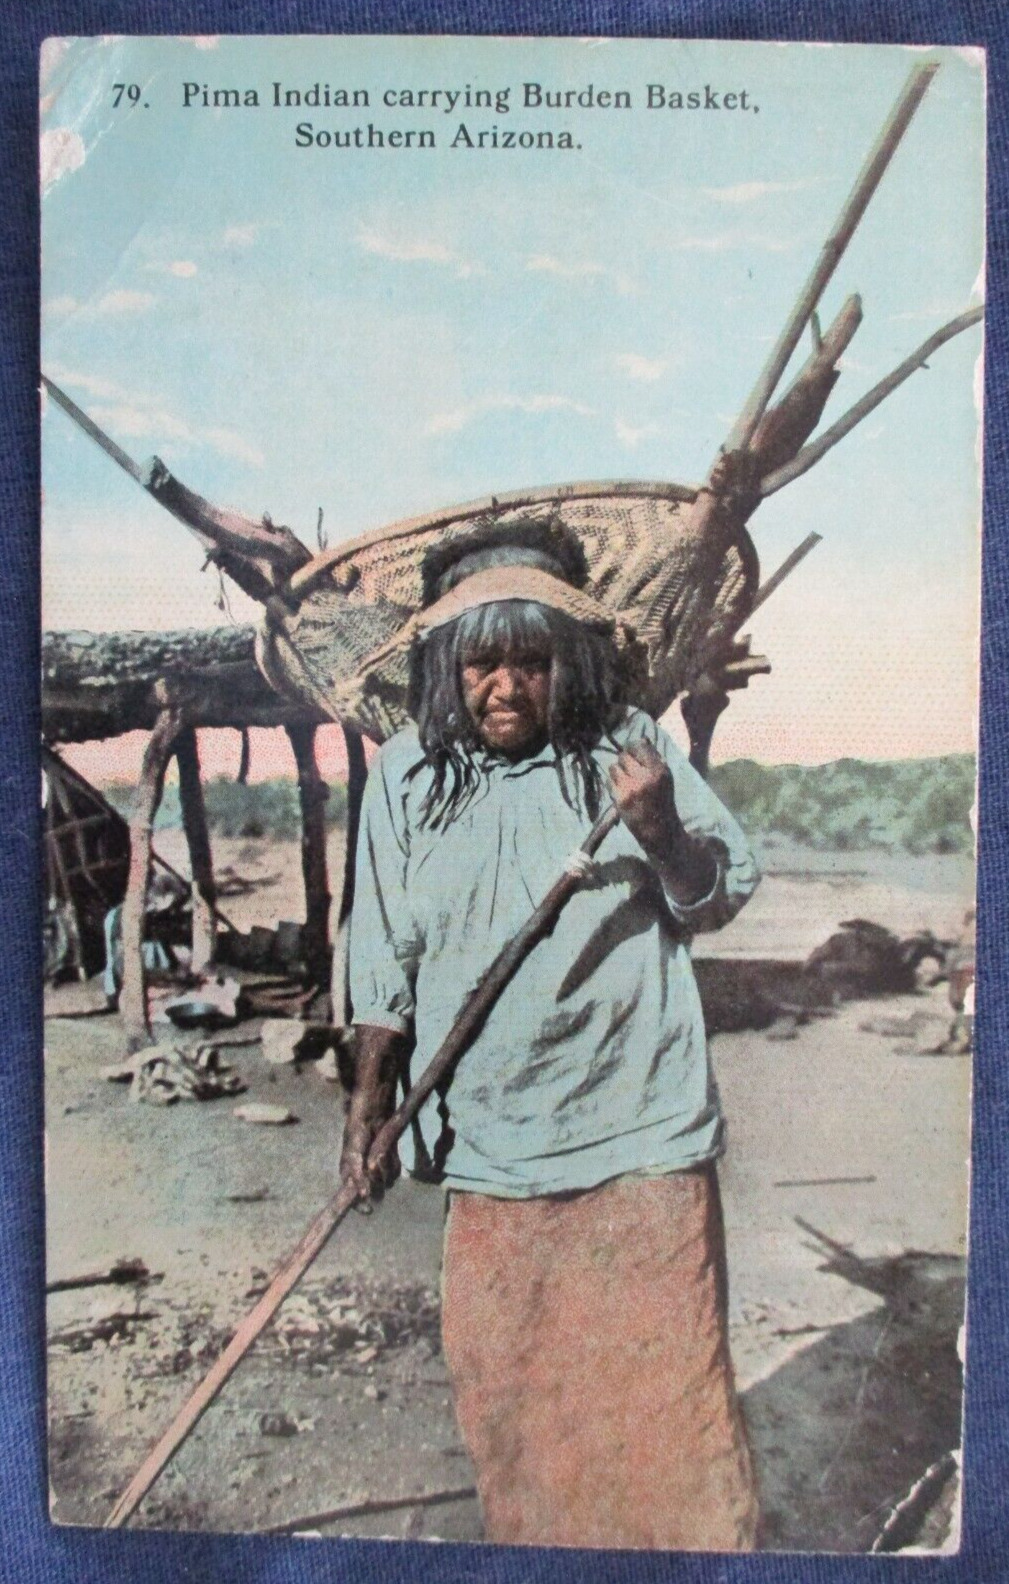 1913 Southern Arizona Pima Indian & Burden Basket Postcard